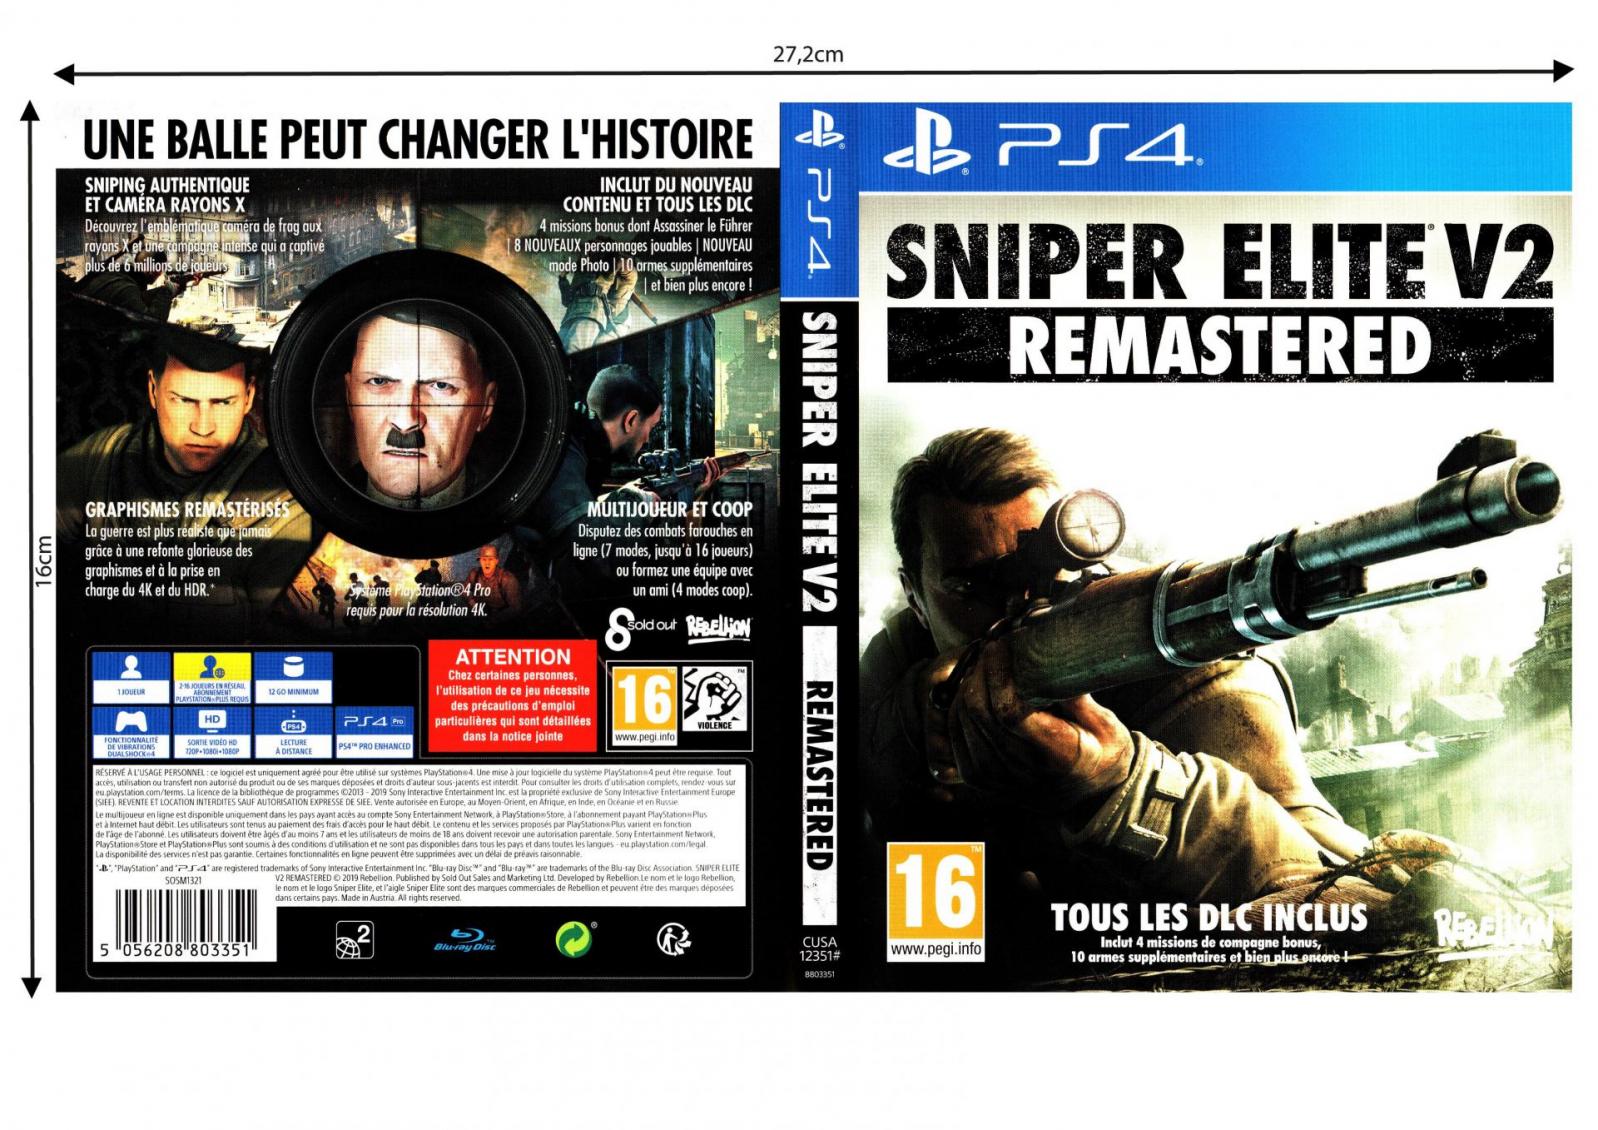 Sniper elite v2 remastered